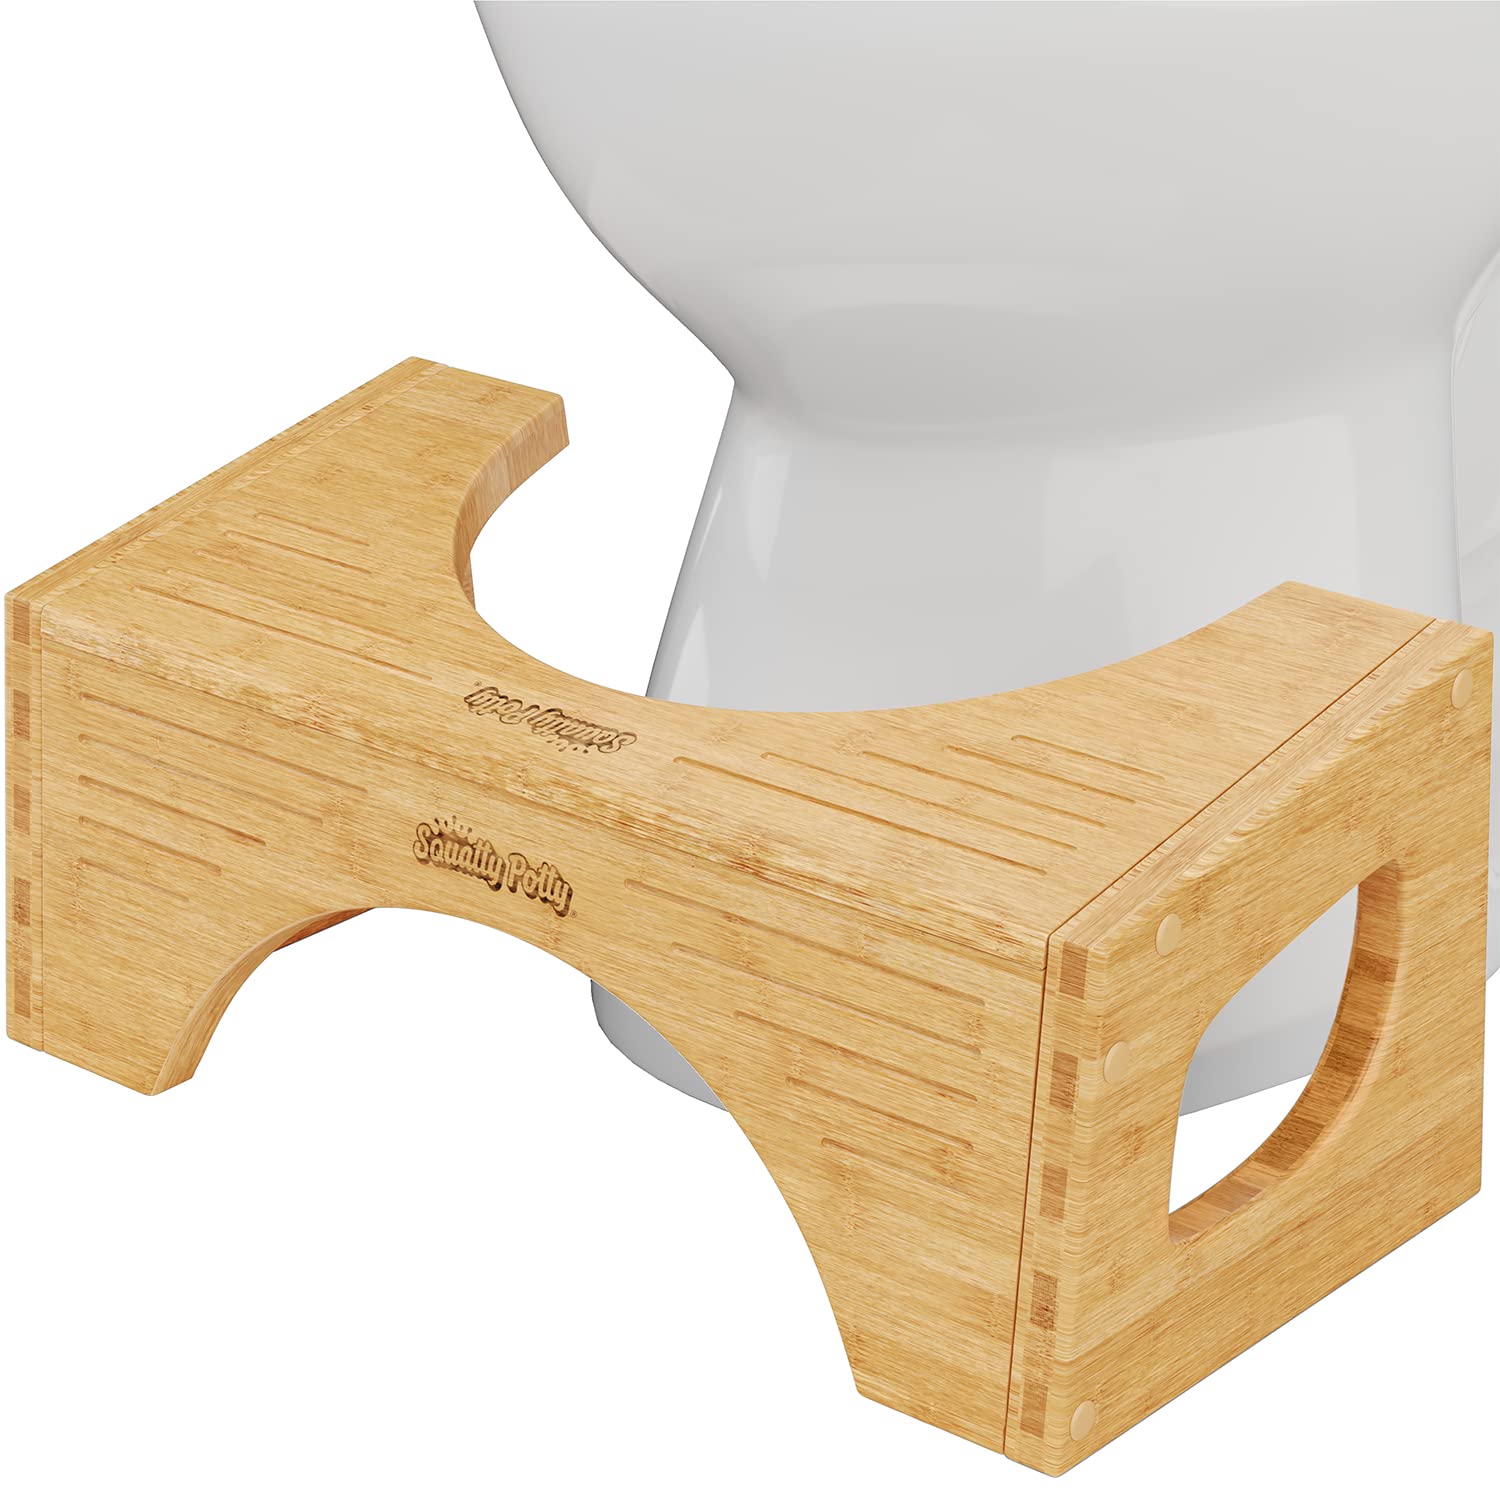 7" & 9" Squatty Potty The Original Bamboo Toilet Flip Stool $25 + Free Shipping